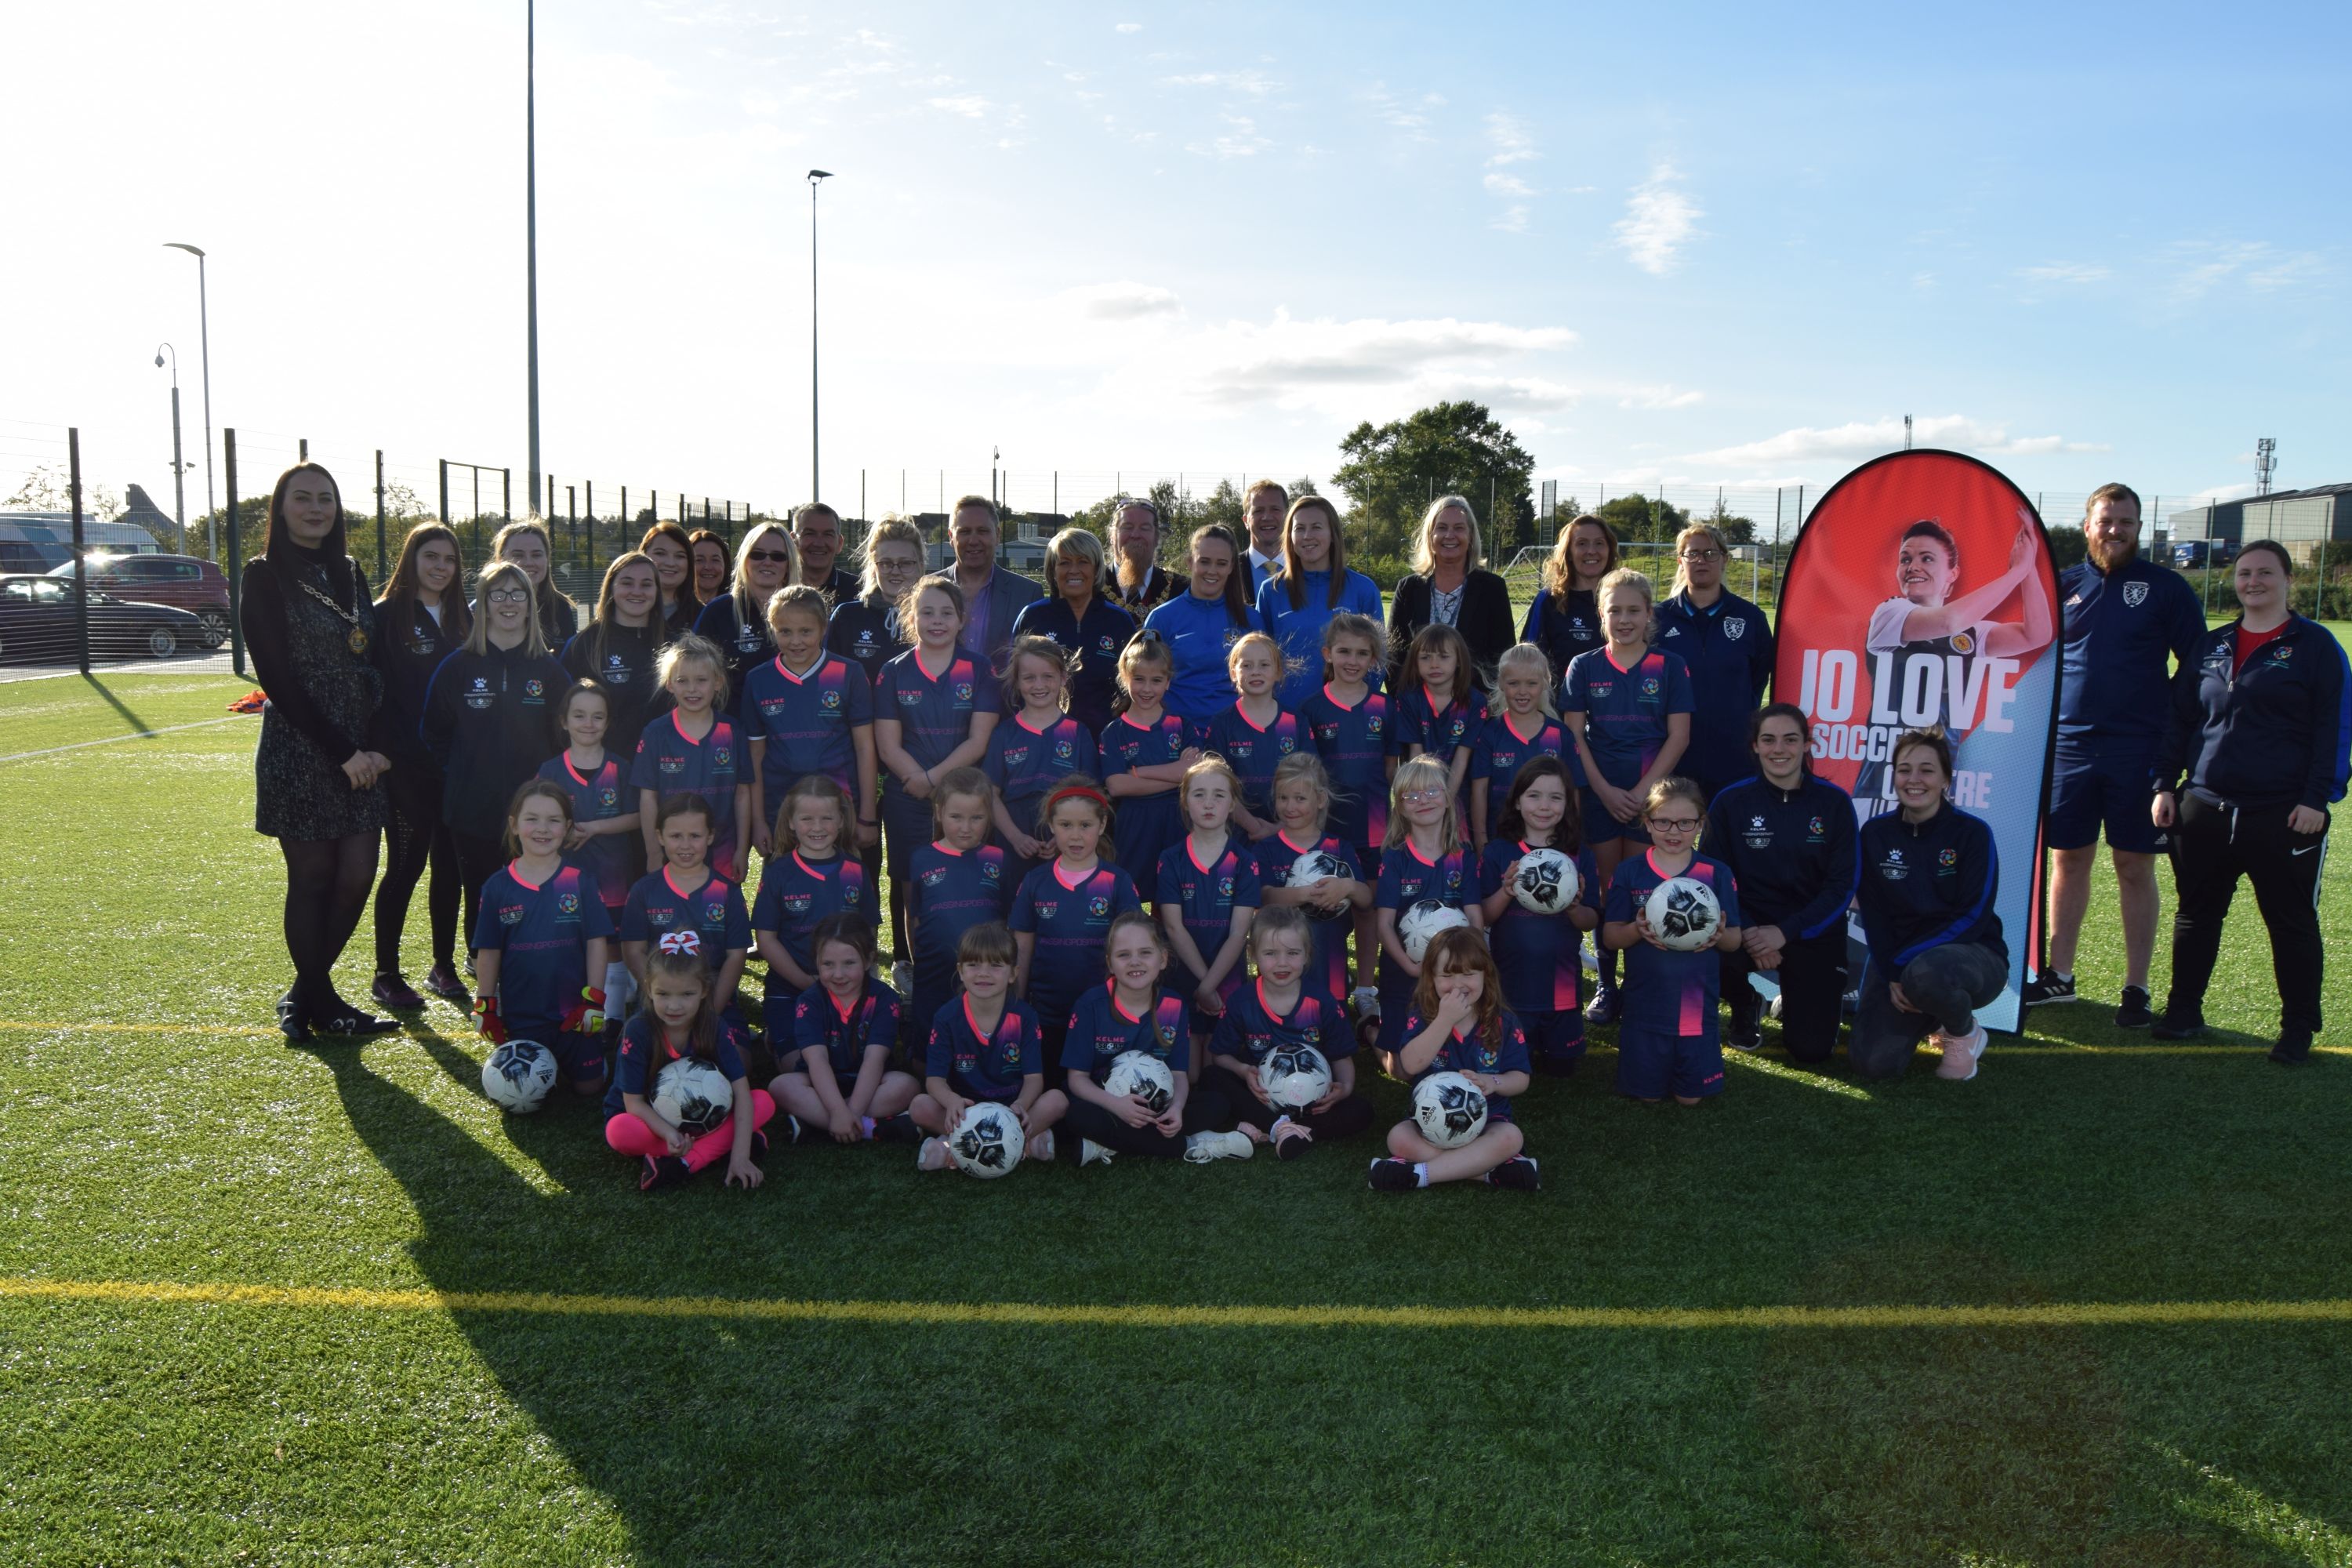 Ayrshire’s Jo Love Soccer Centre turns one